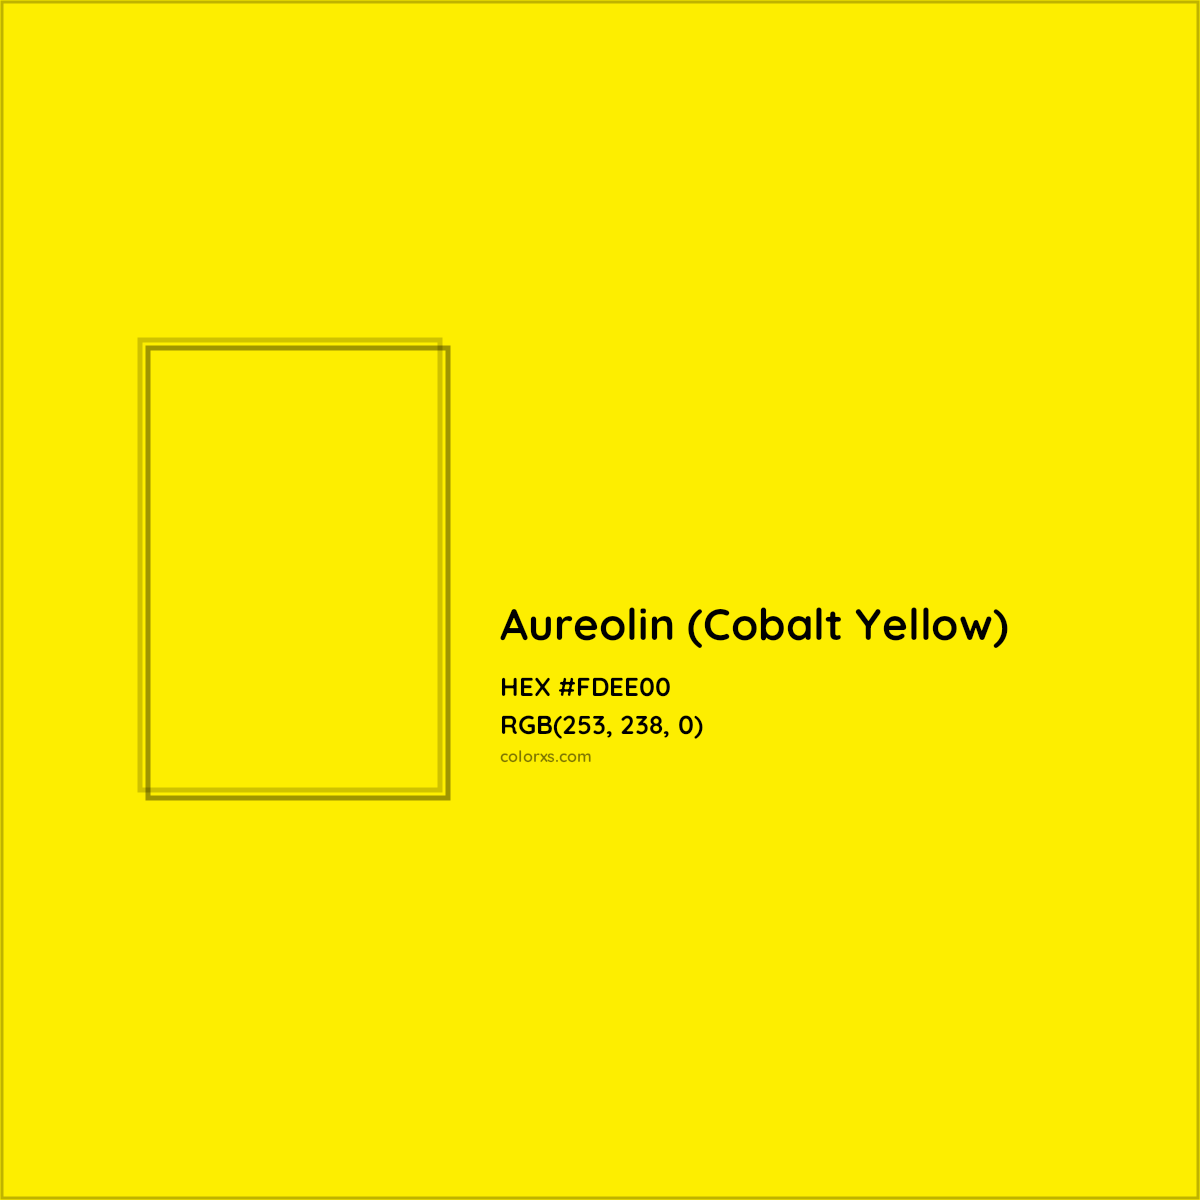 HEX #FDEE00 Aureolin (Cobalt Yellow) Color - Color Code